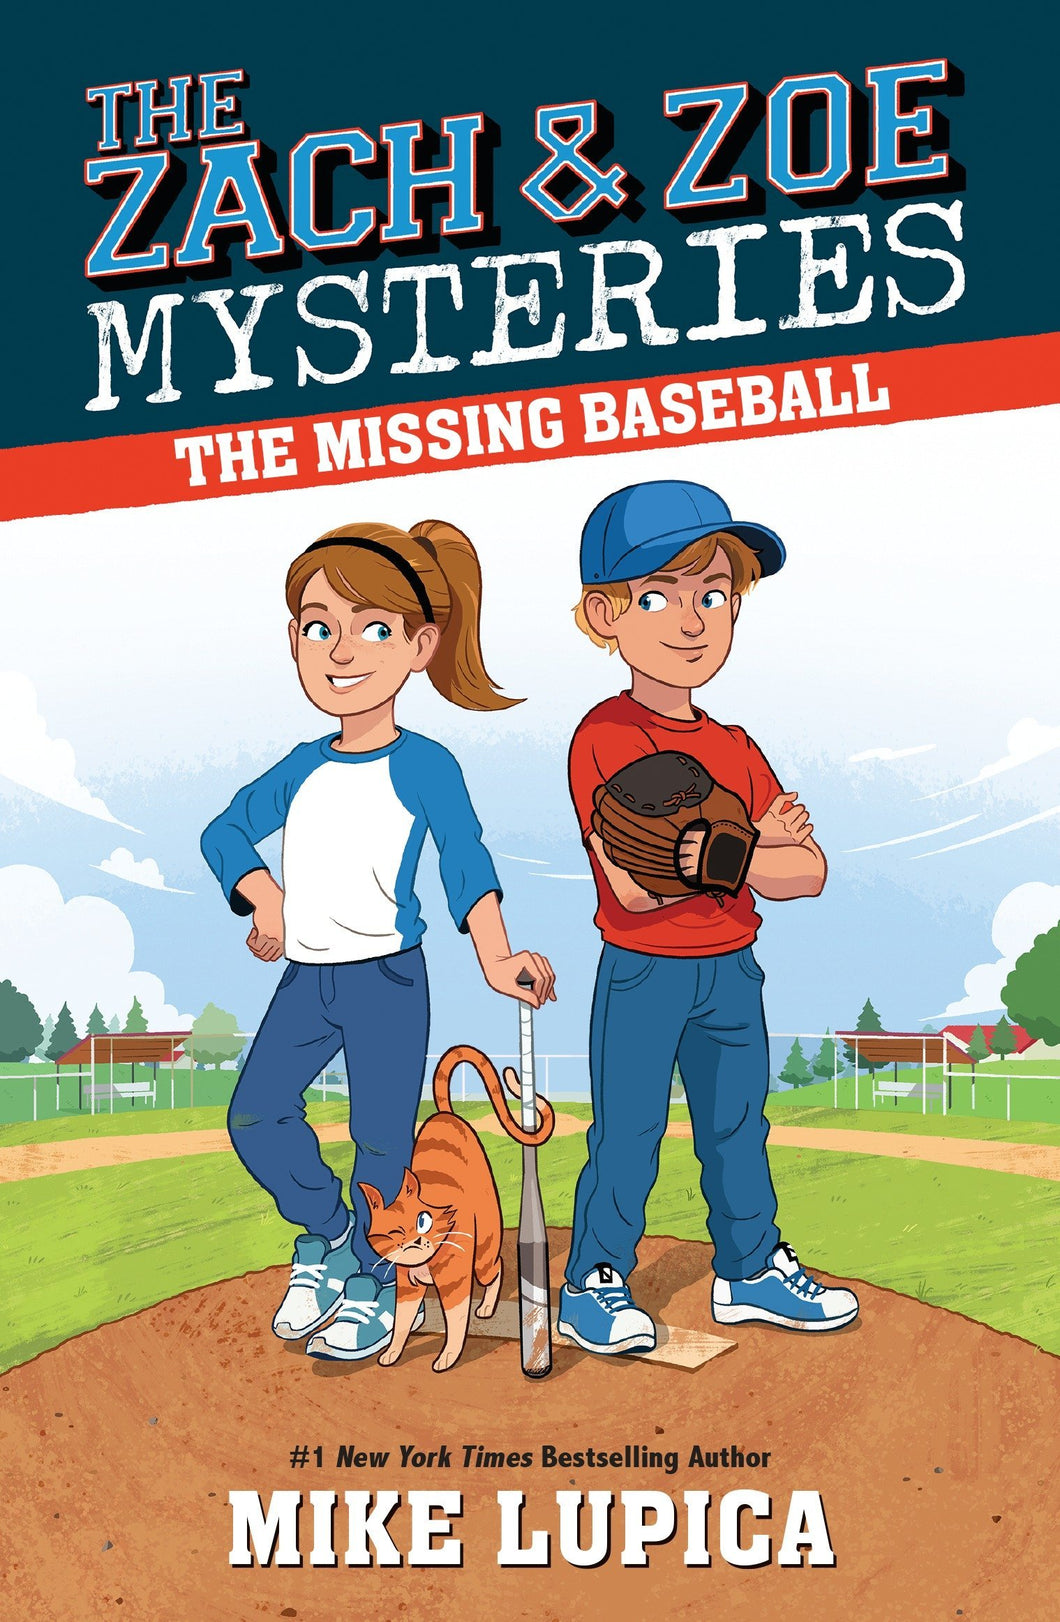 The Missing Baseball (Zach & Zoe Book 1)